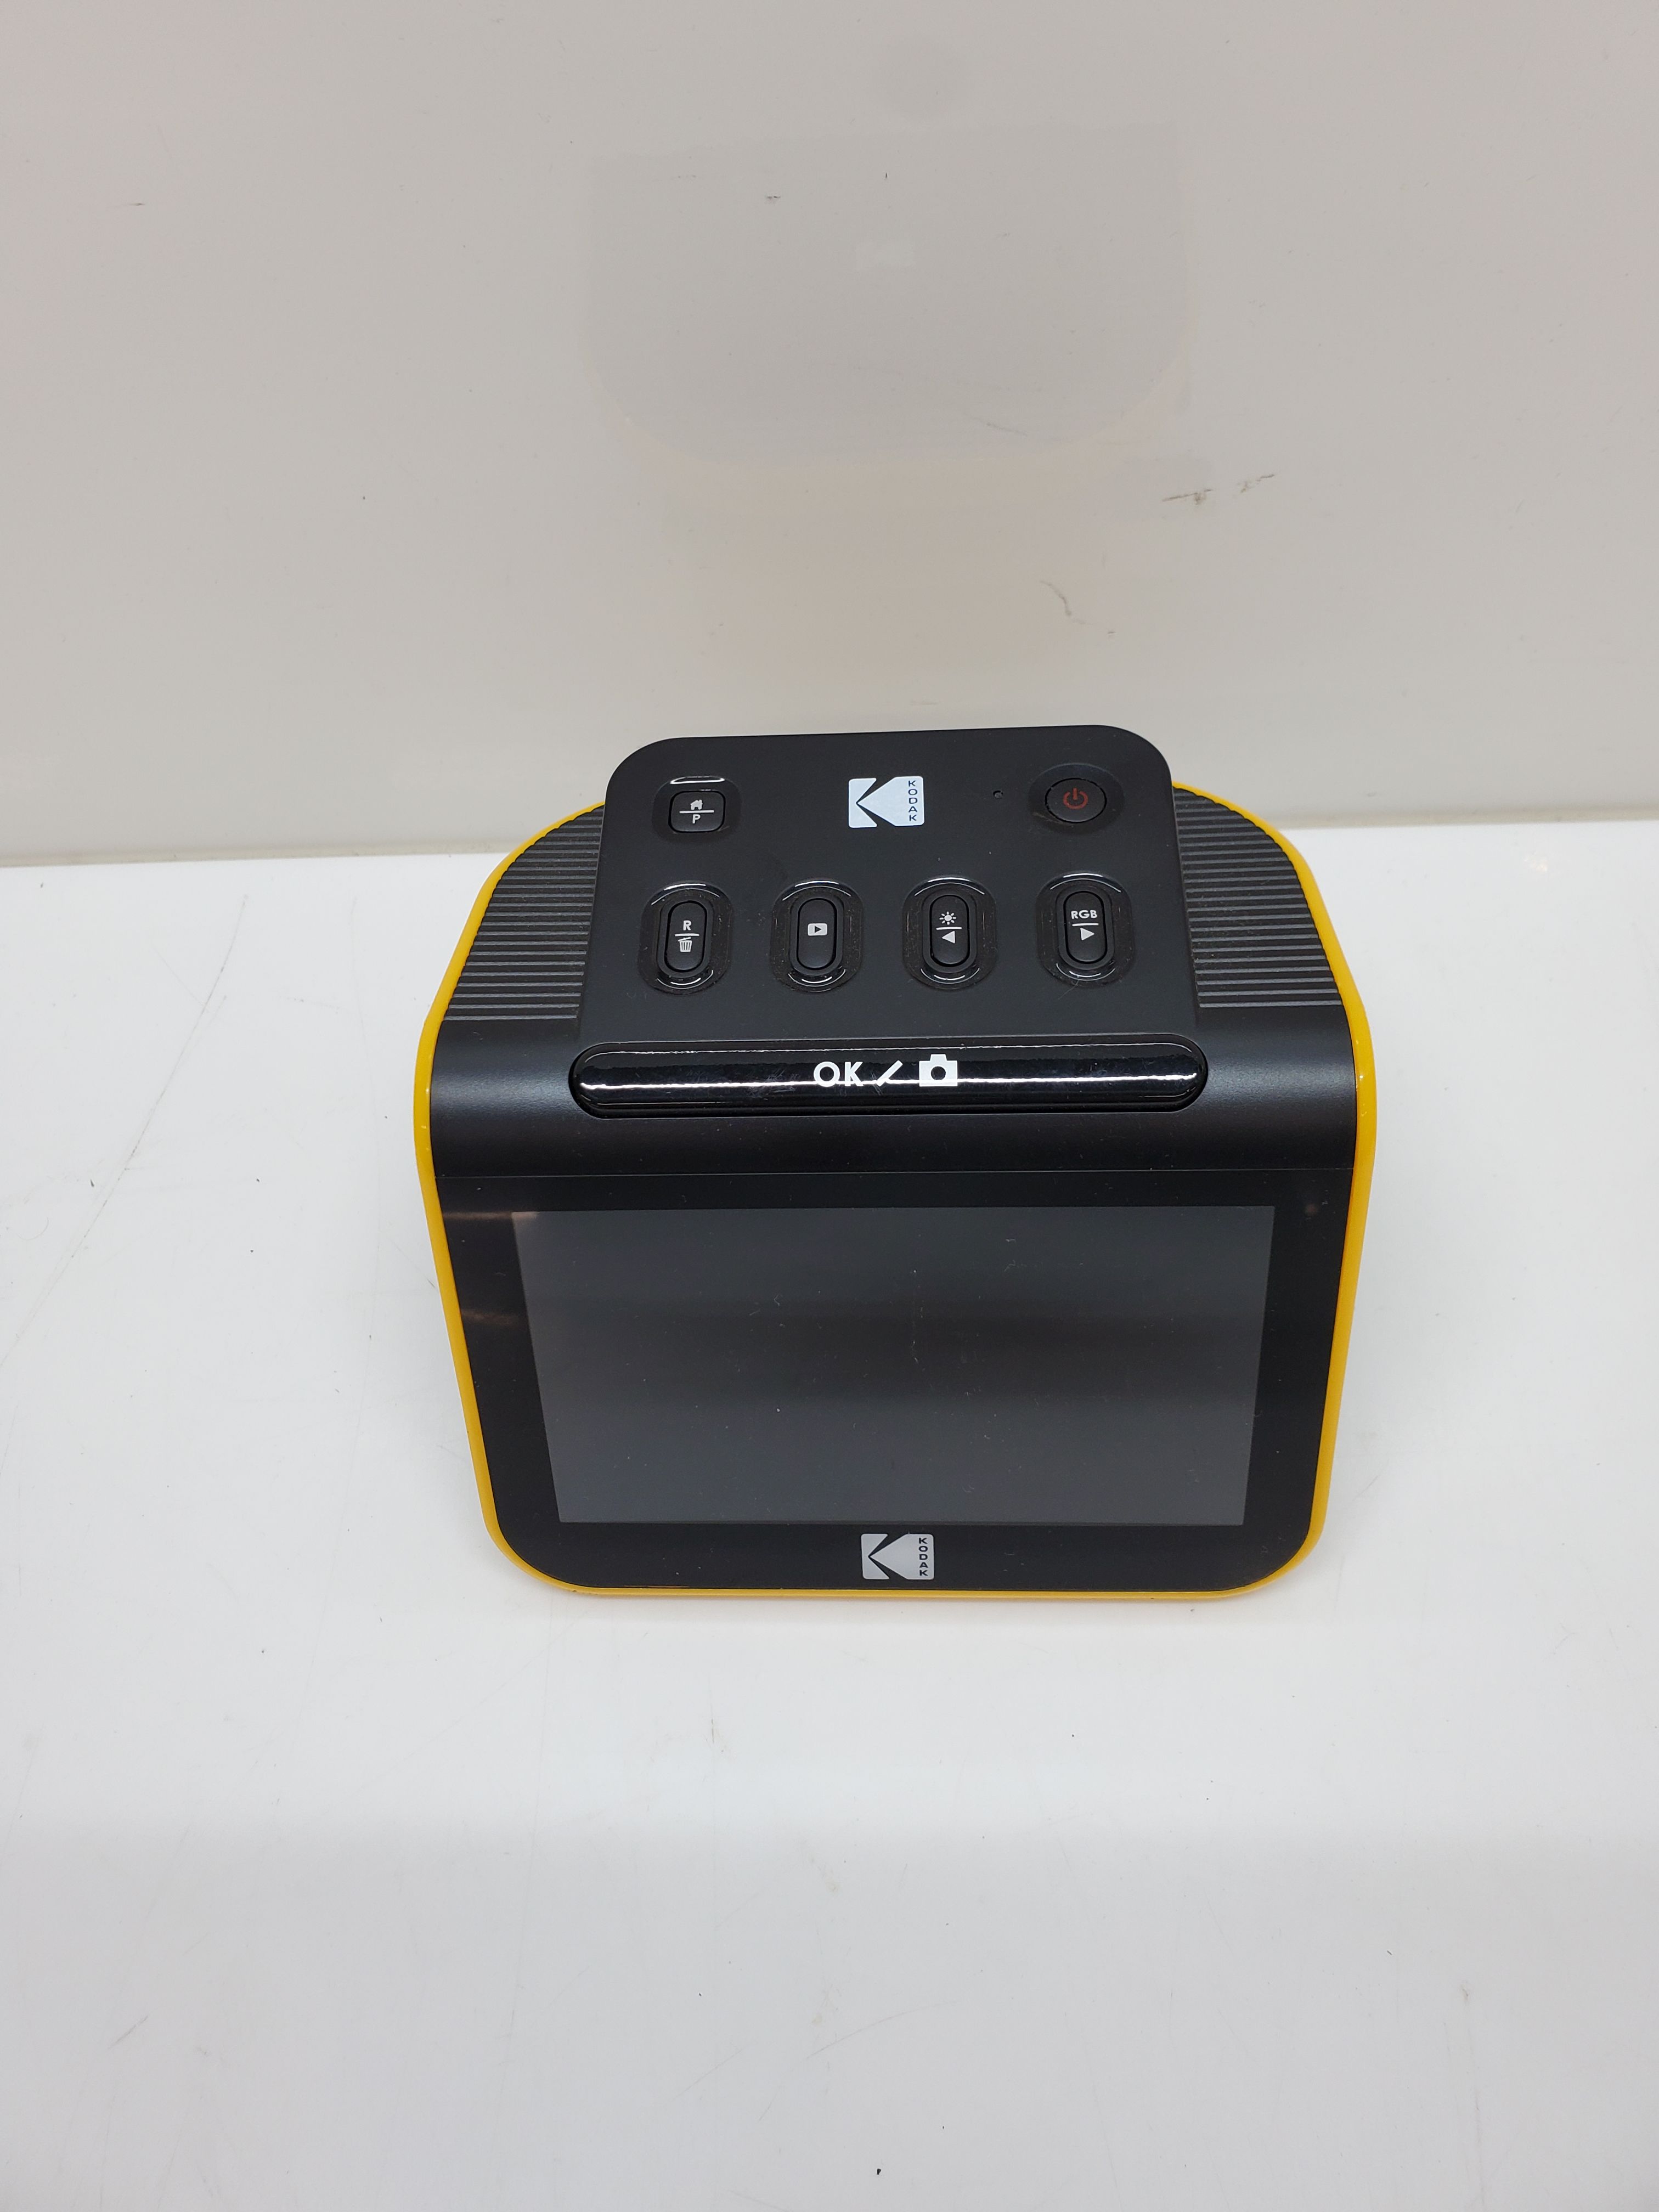 Kodak Slide-N-Scan - photo/video - by owner - electronics sale